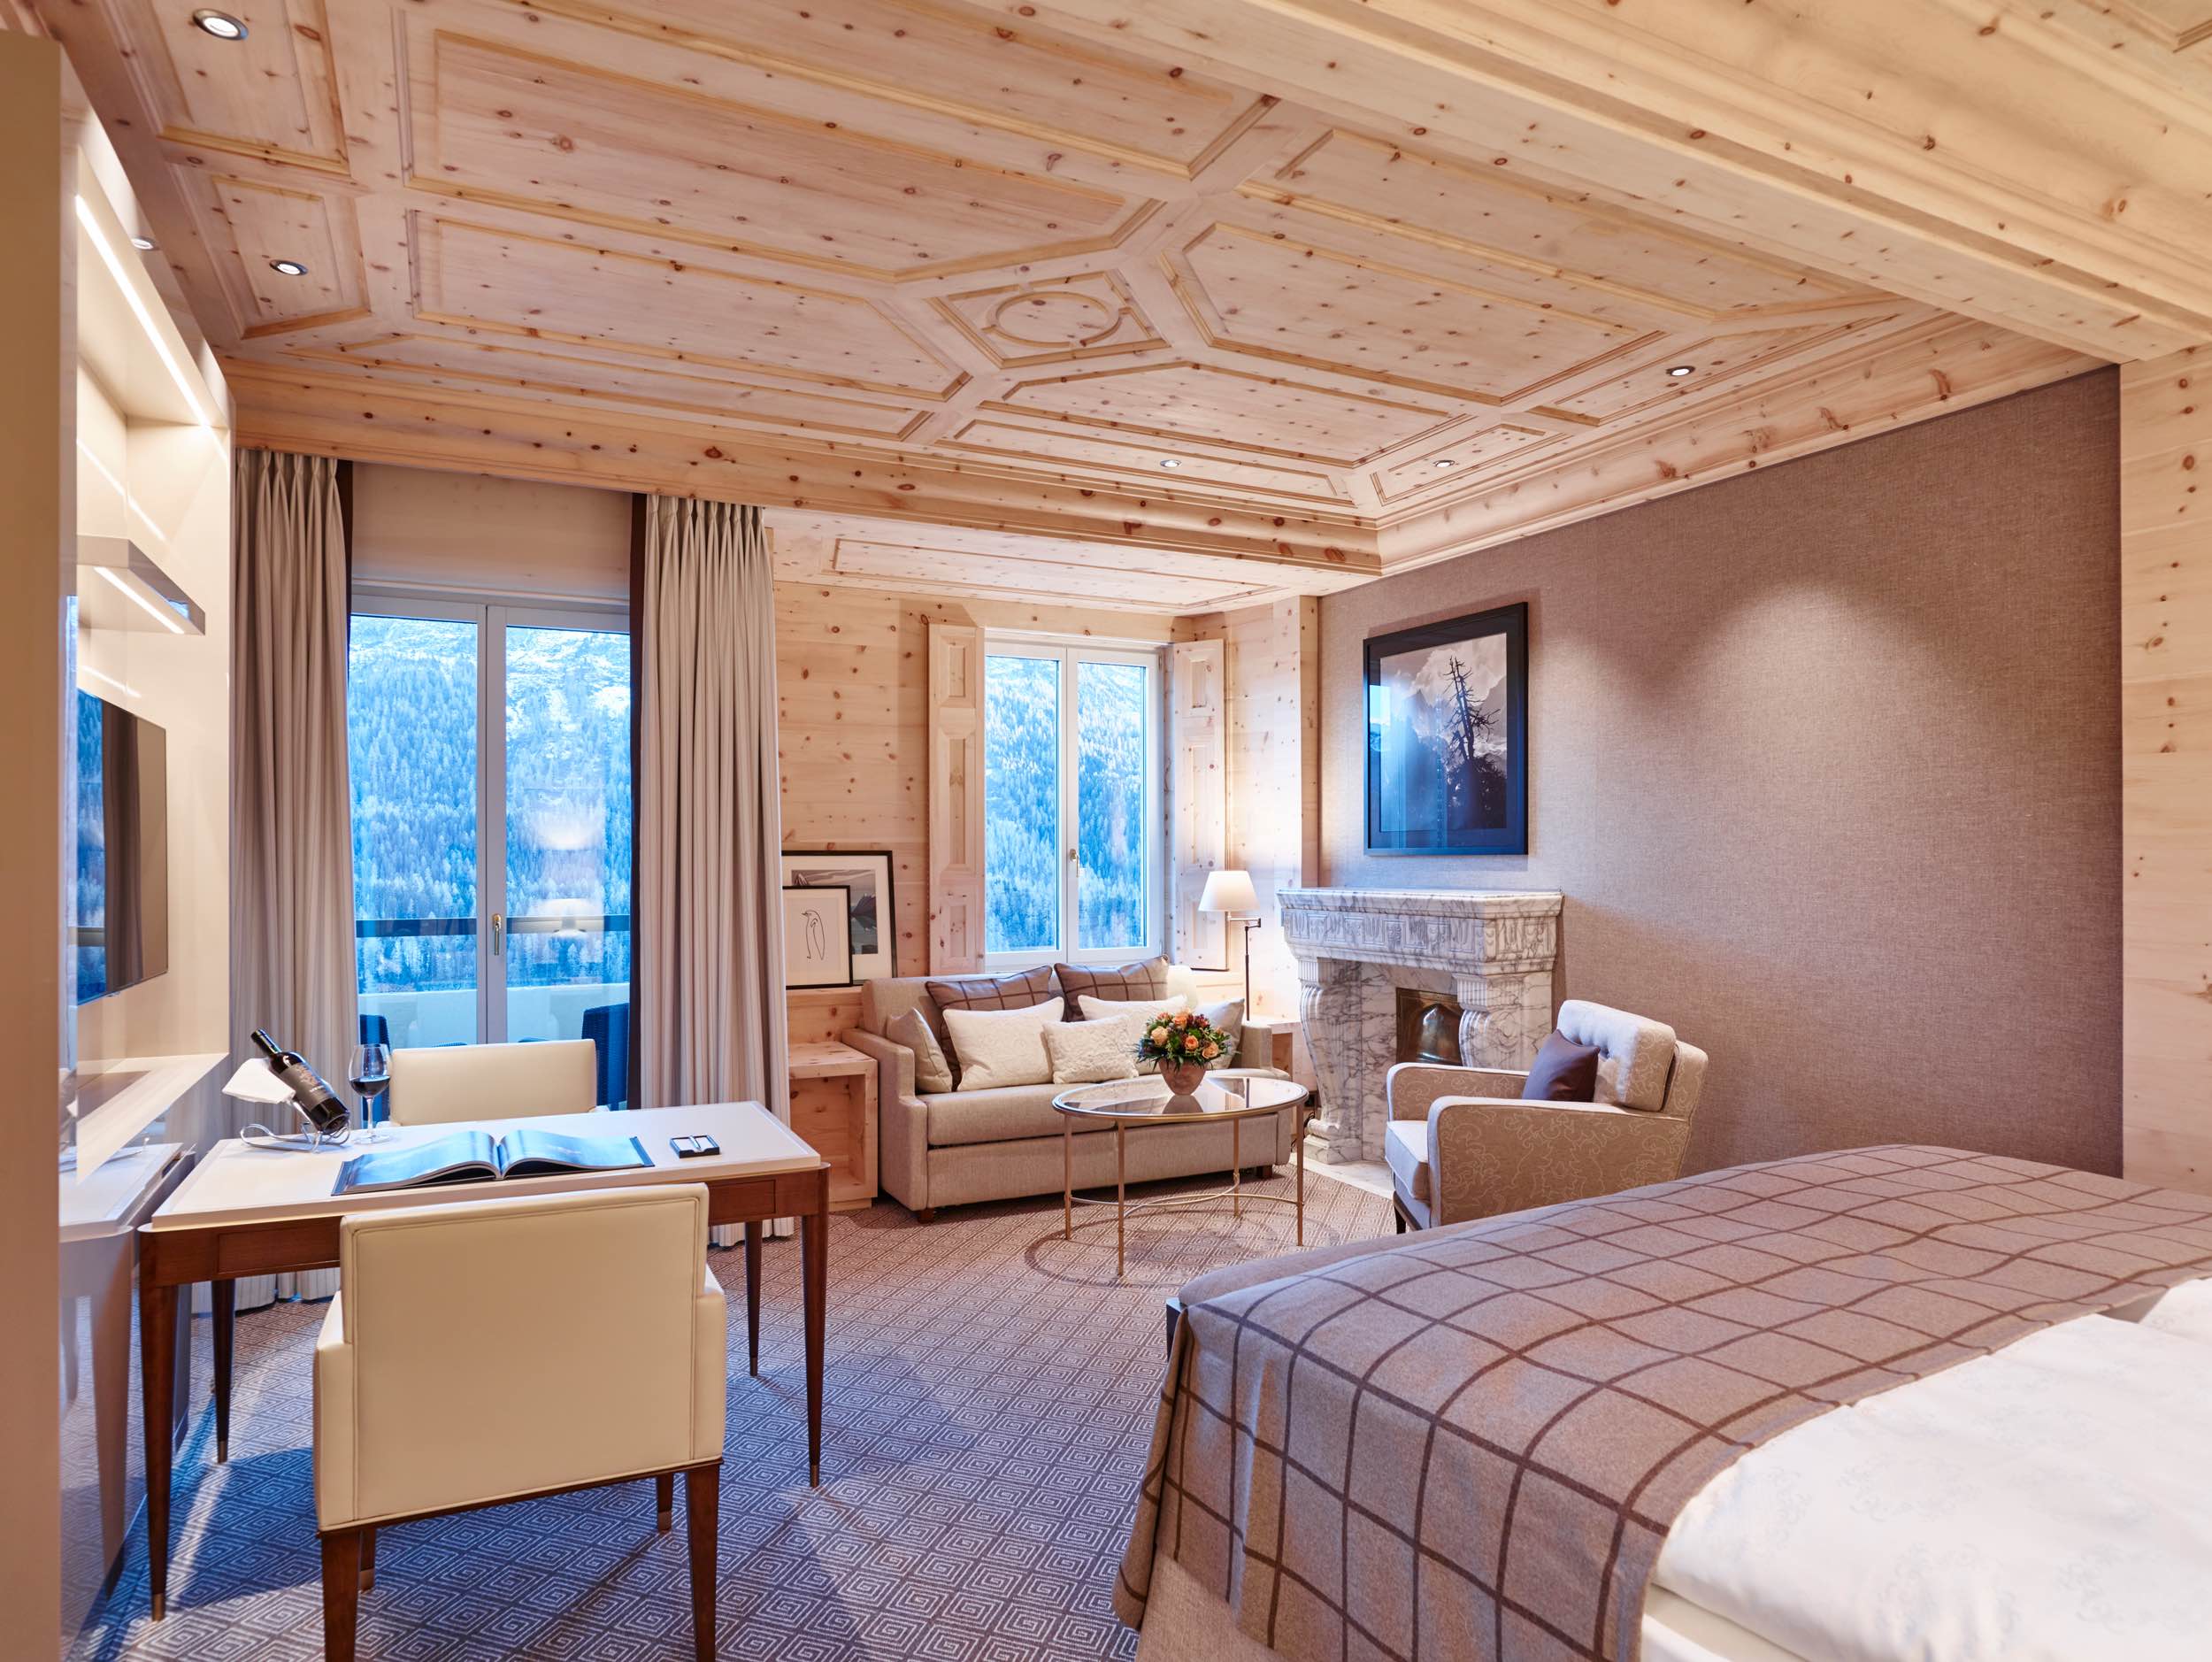 Kulm Hotel 以原木打造而成的舒適套房。